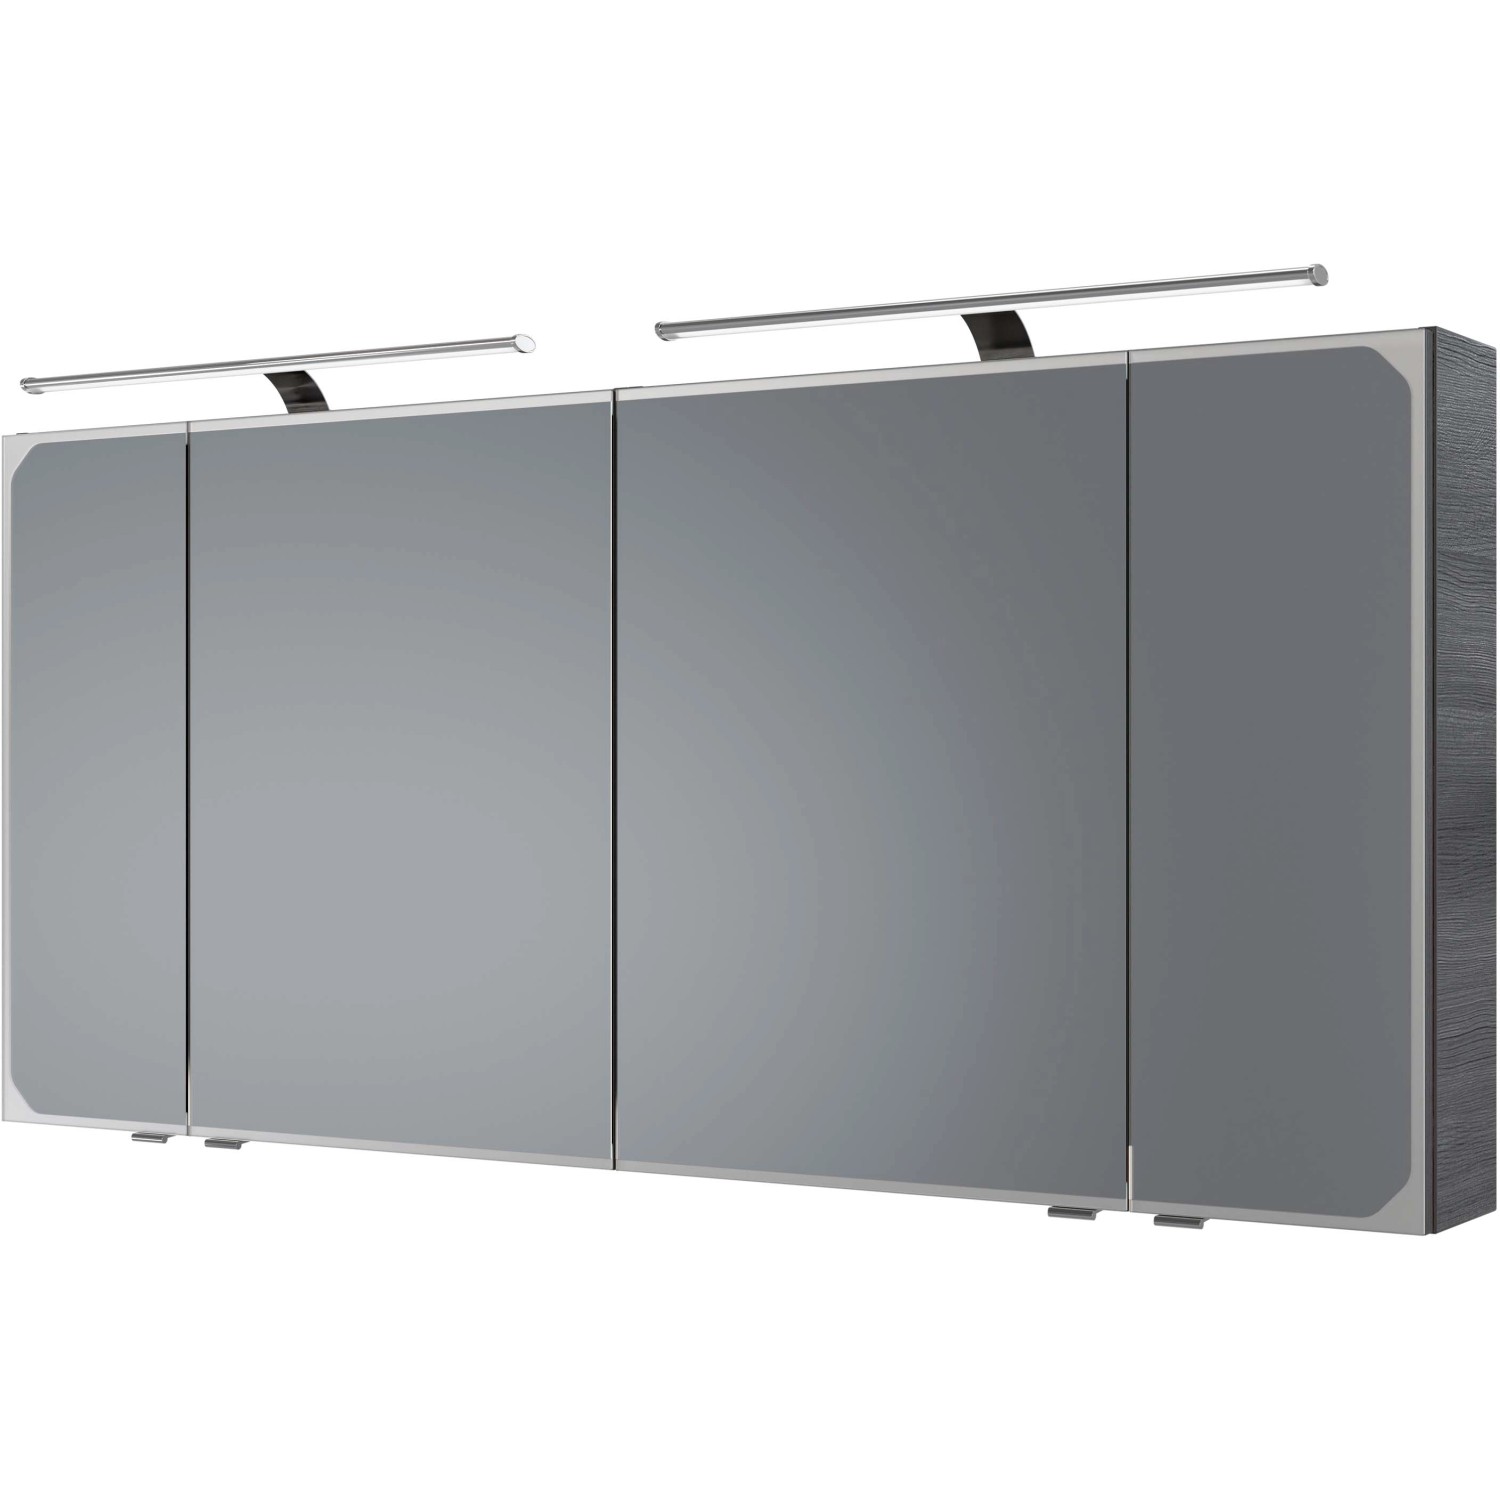 Pelipal Spiegelschrank Quantum 05 Graphit 150 cm mit Softclose Türen